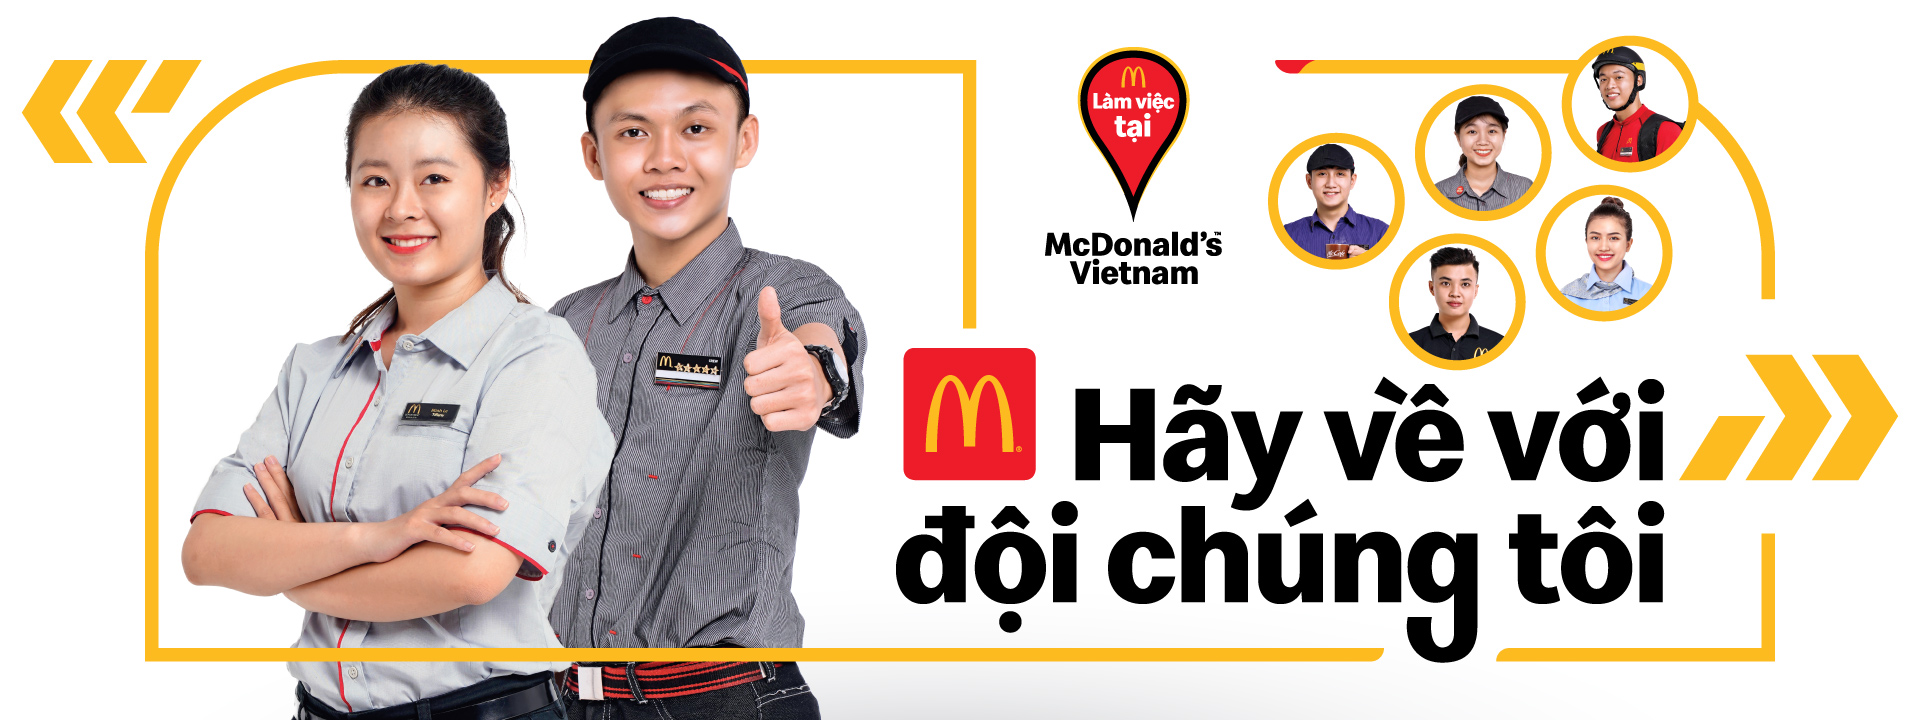 Careers - McDonald